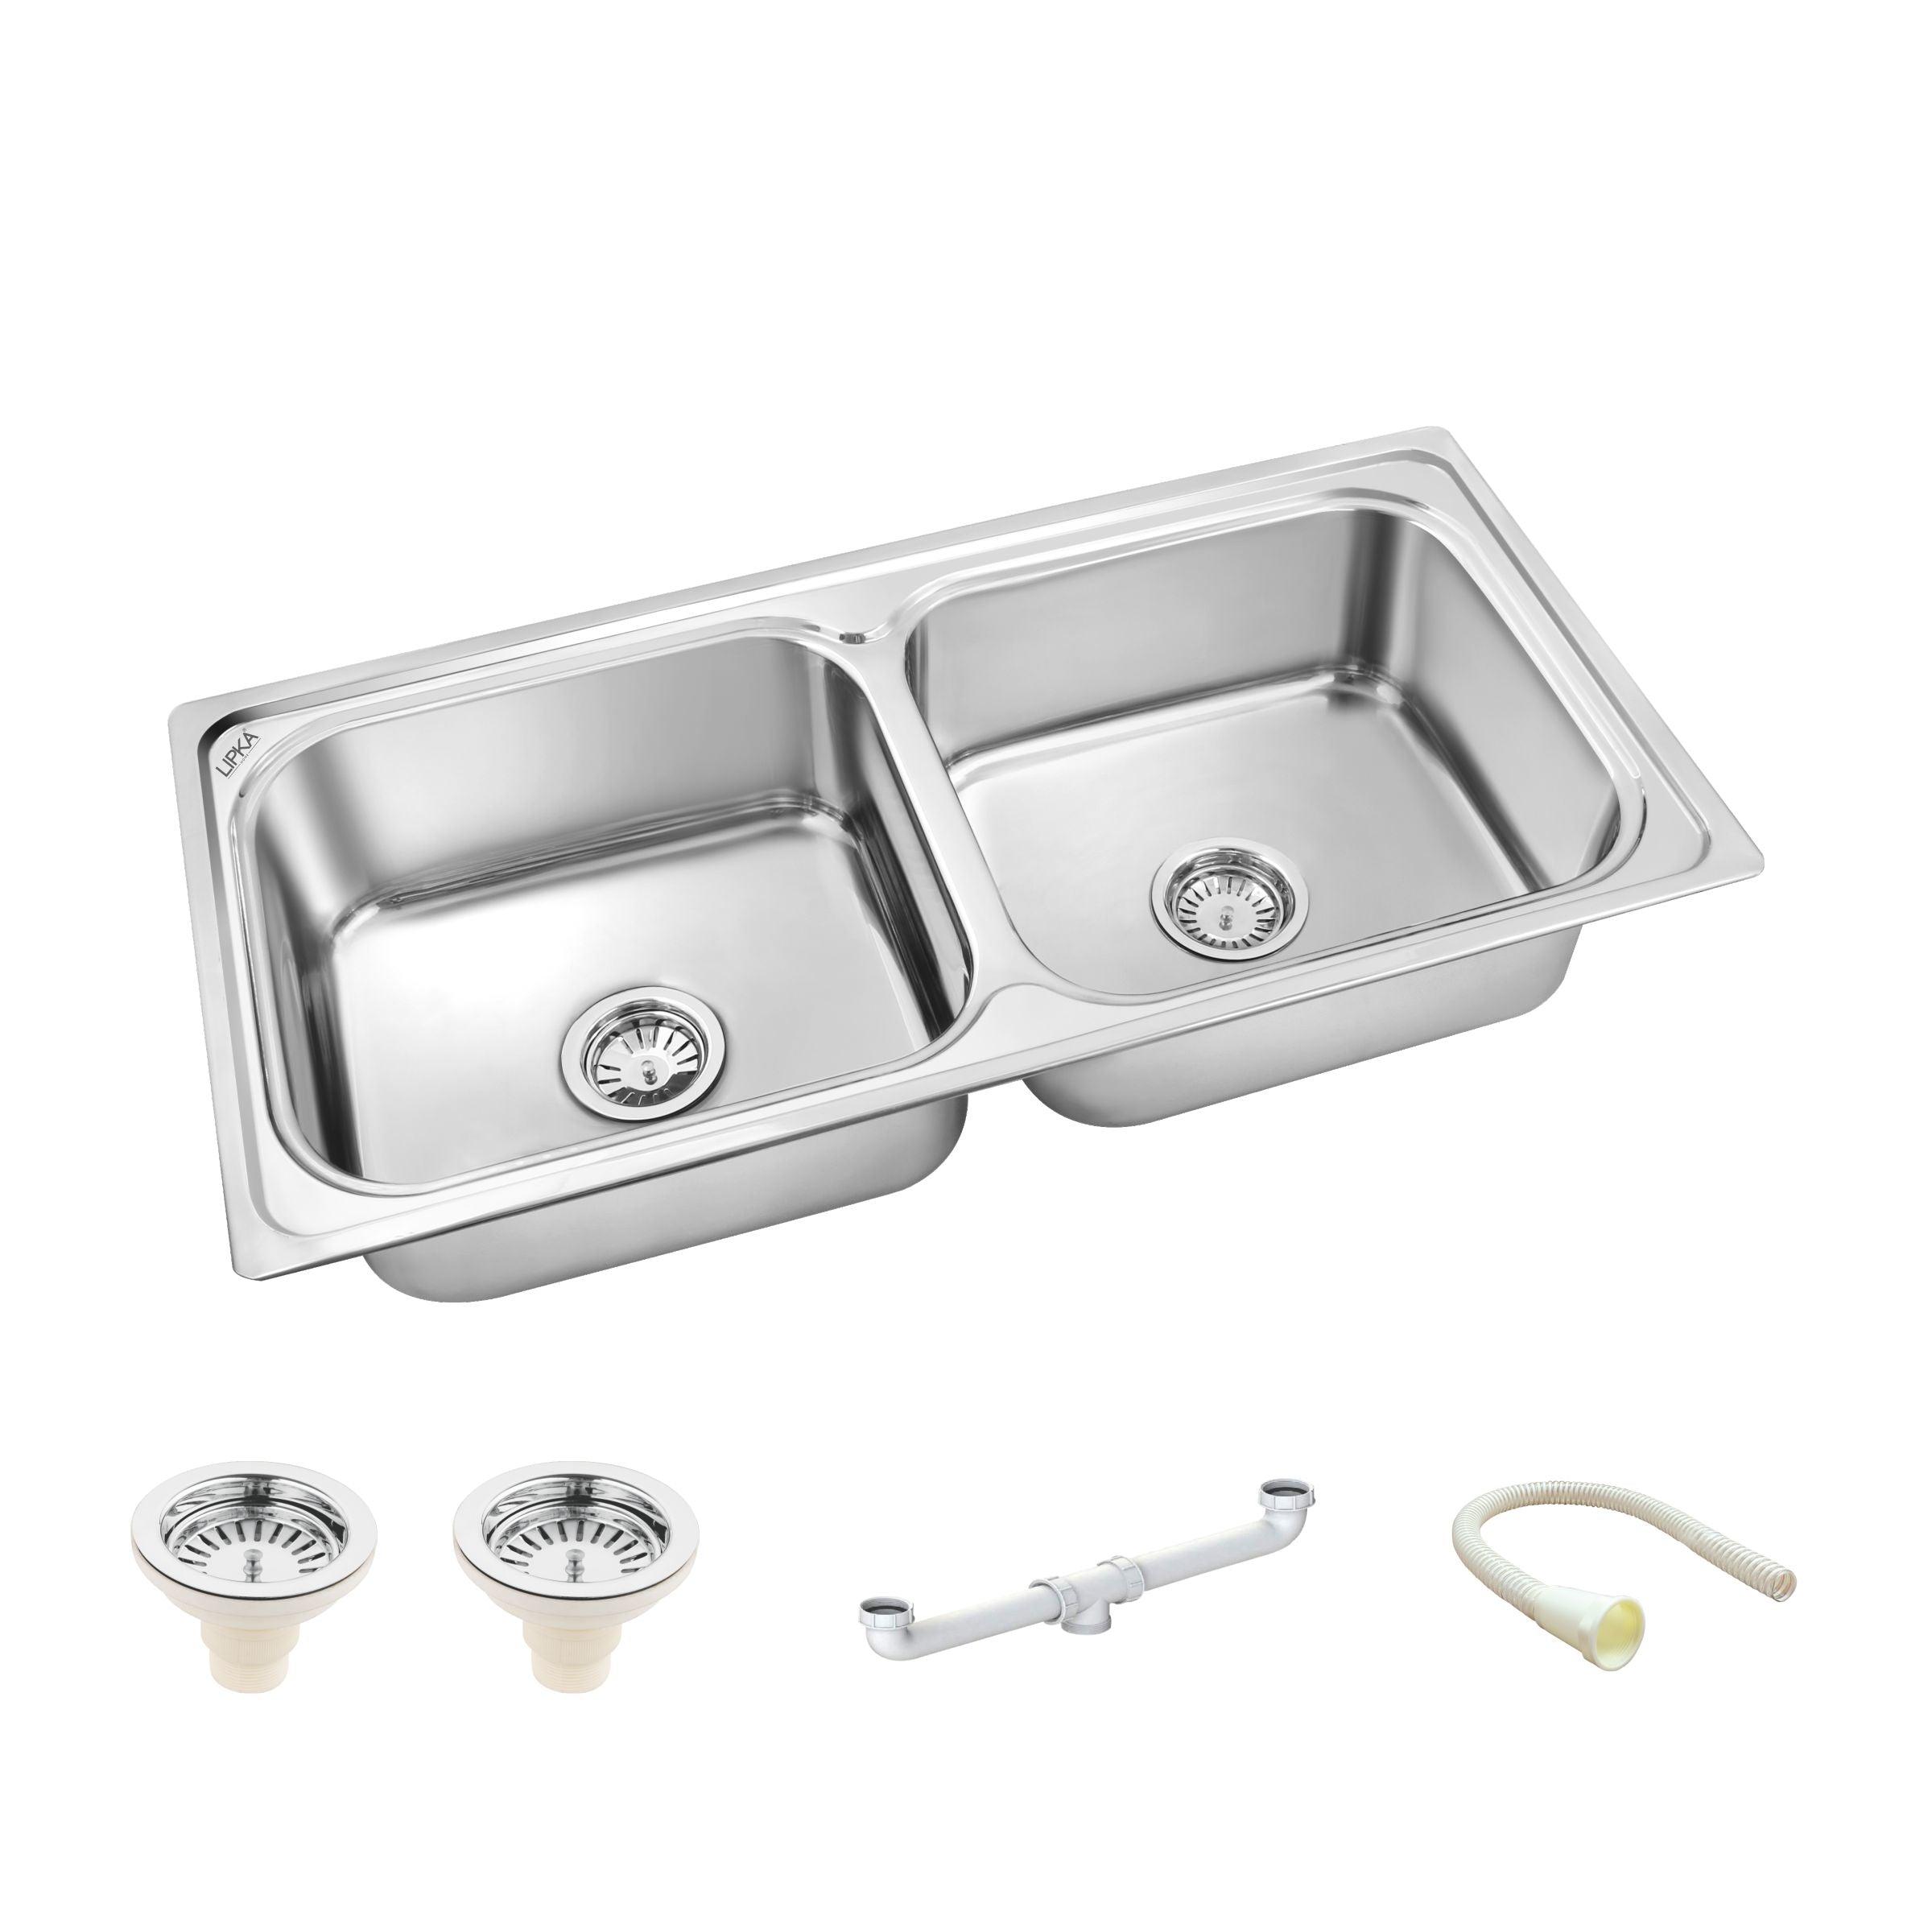 Square Double Bowl Kitchen Sink (32 x 20 x 8 Inches) - LIPKA